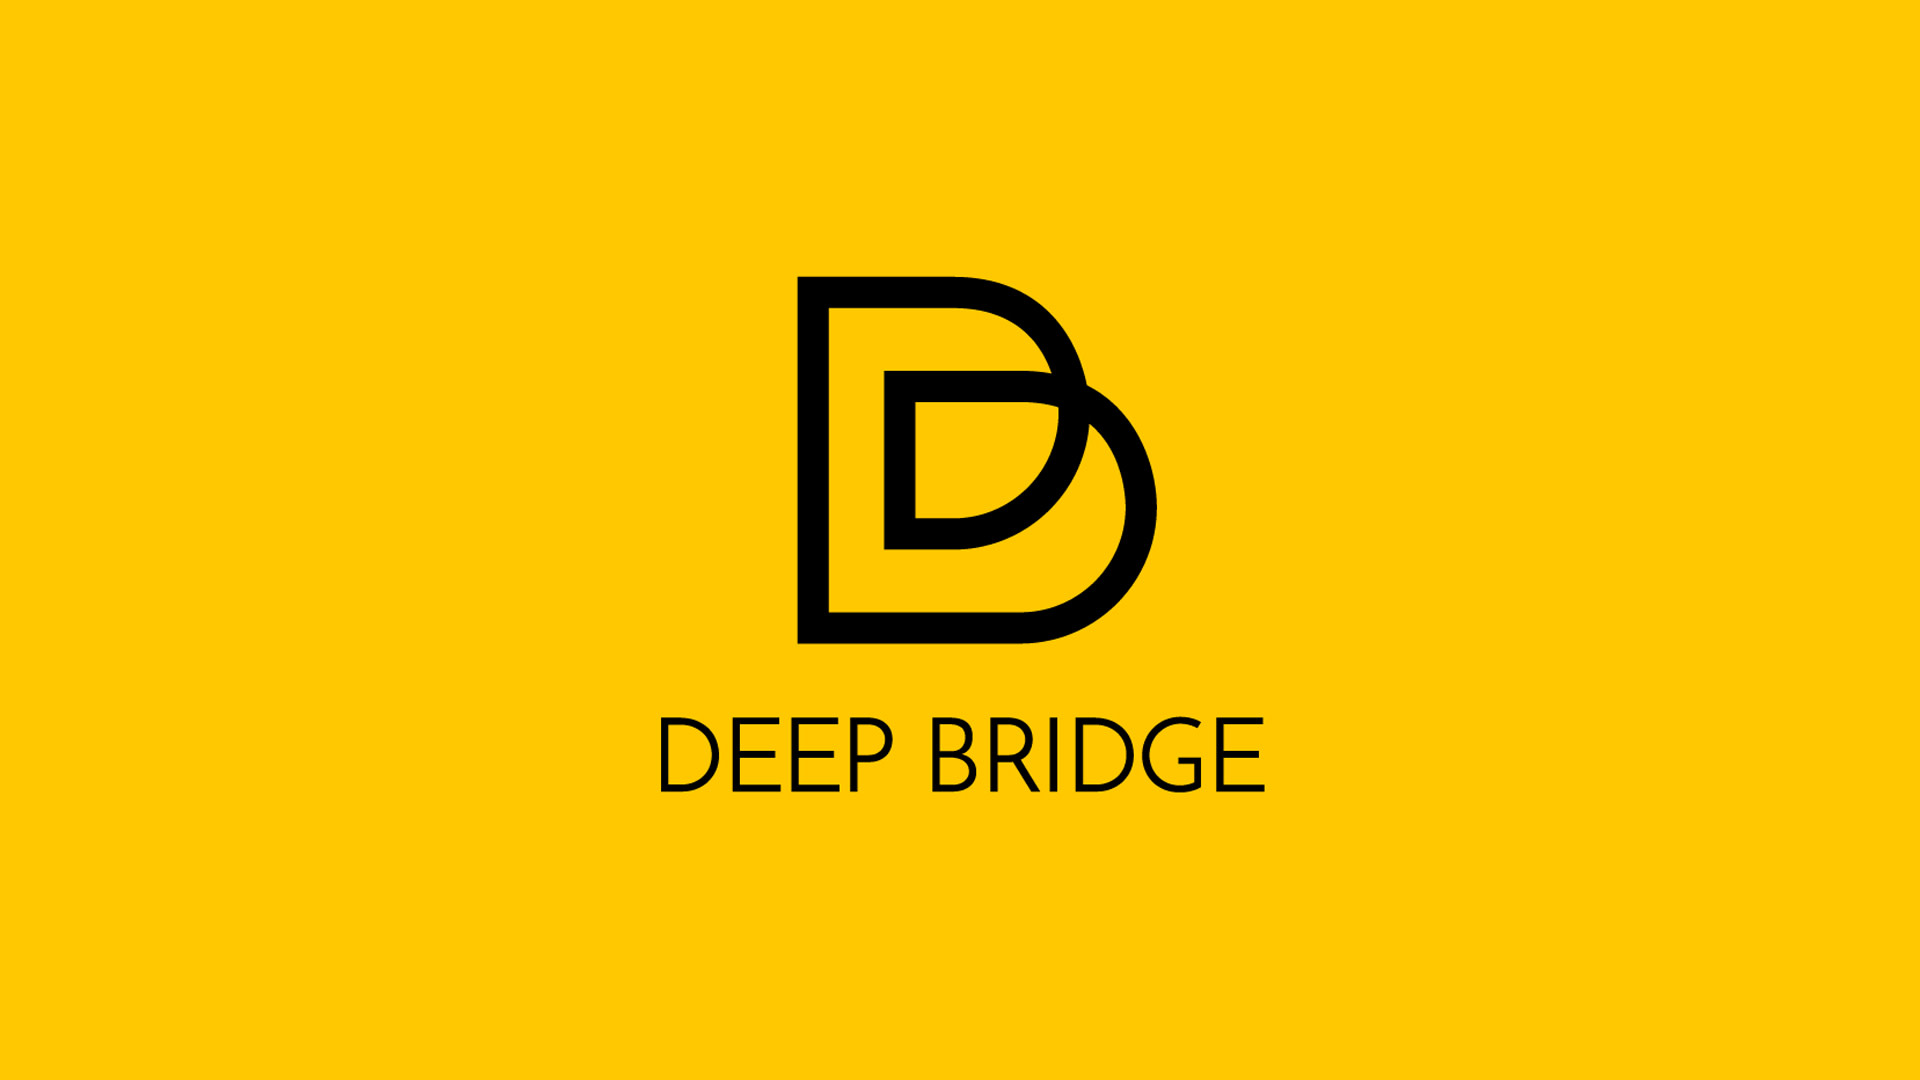 Deep Bridge maakt twee nieuwe shows bekend.